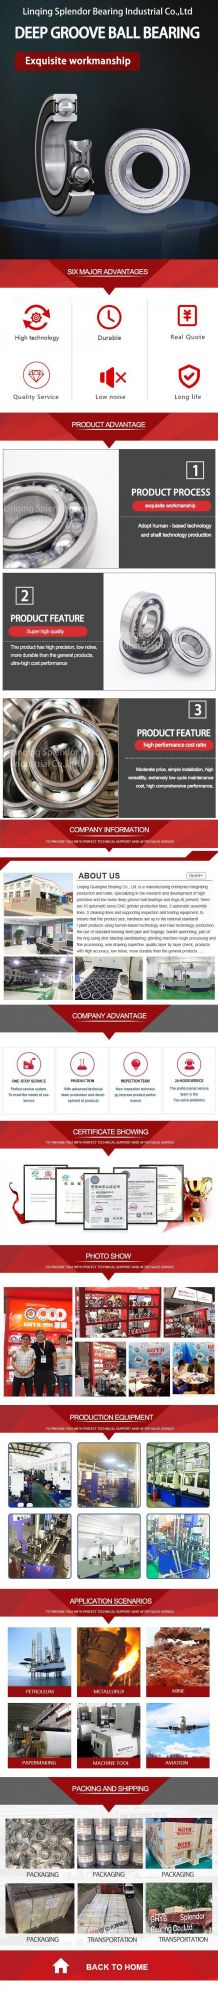 China Factory Distributor Supplier of Deep Groove Ball Bearings for Motors, Compressors, Alternators 6212-2rz/P6/Z2V2